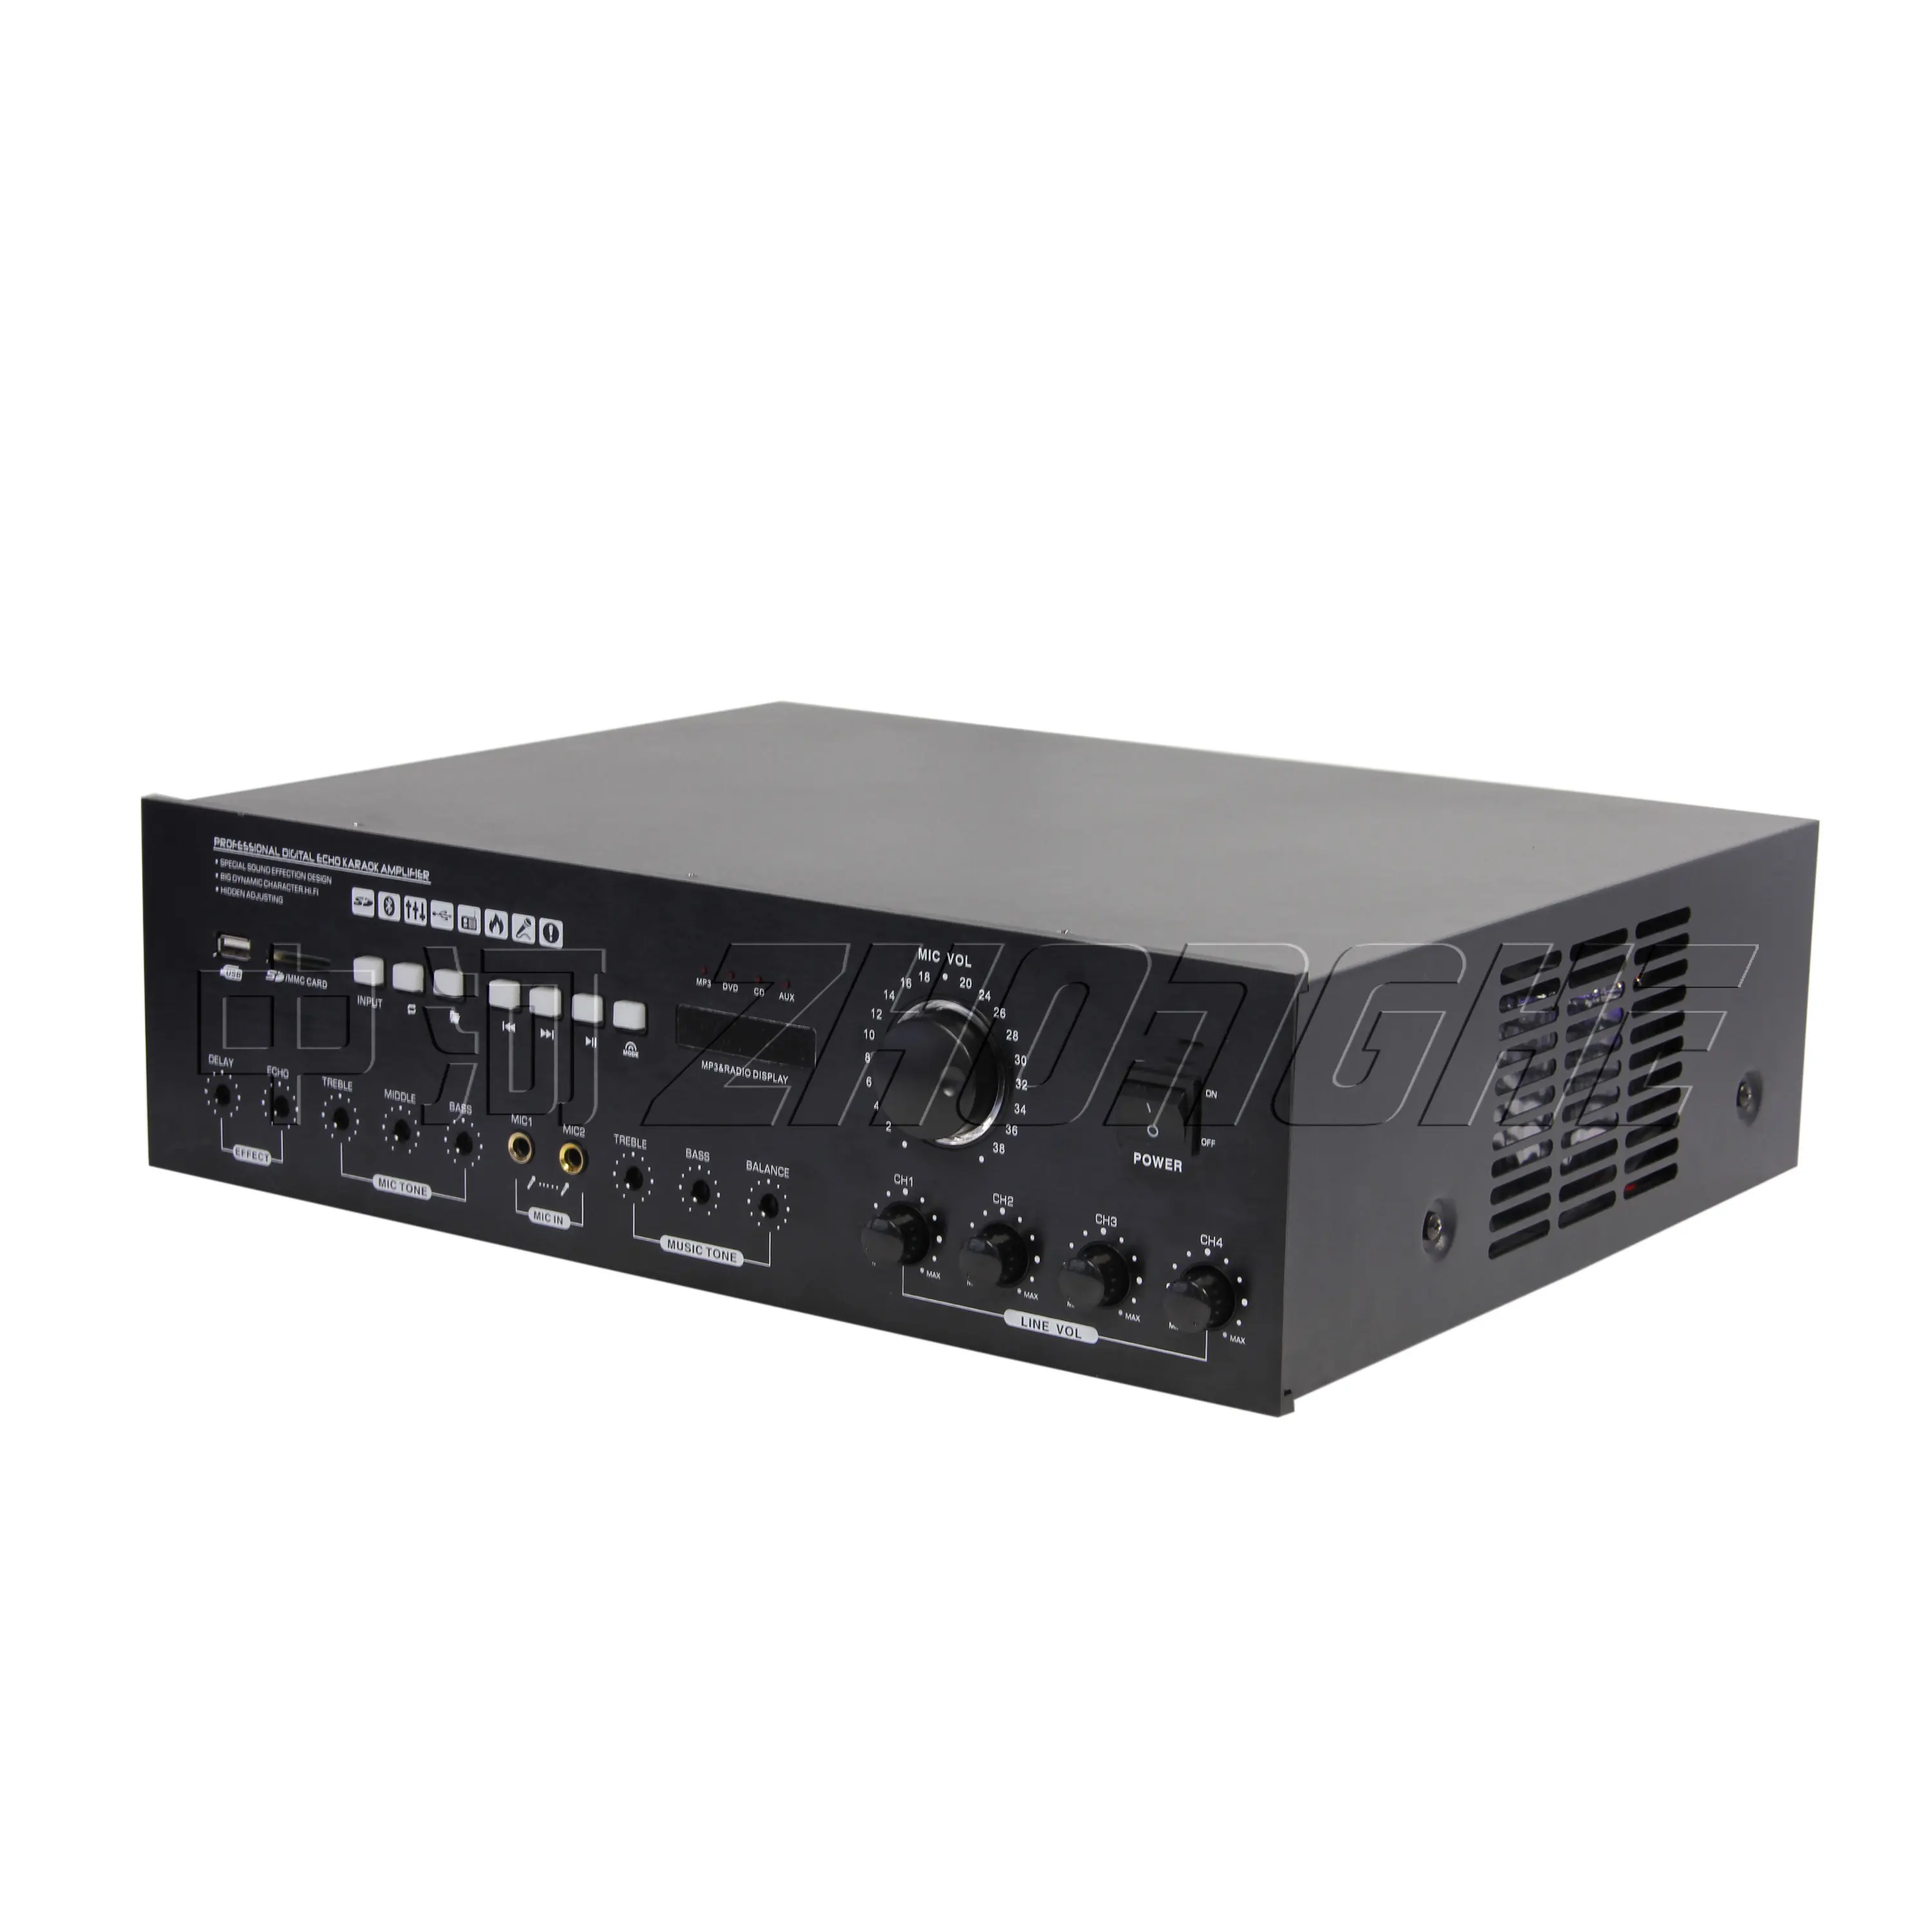 Amplifier Stereo Daya Audio Profesional Harga Murah untuk Sistem Karaoke Pa